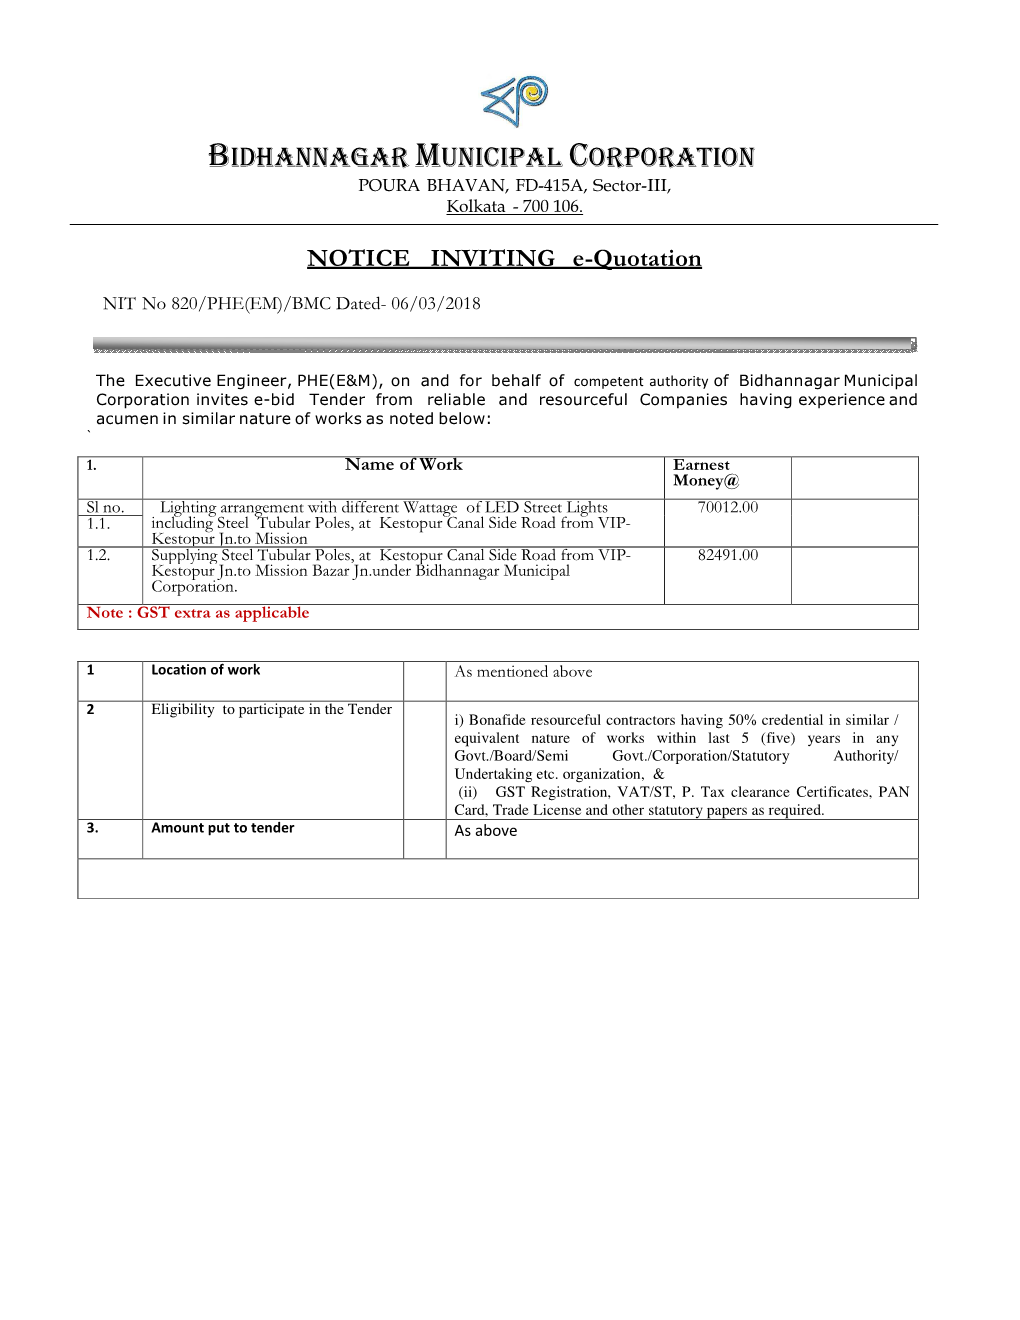 BIDHANNAGAR MUNICIPAL CORPORATION POURA BHAVAN, FD-415A, Sector-III, Kolkata - 700 106